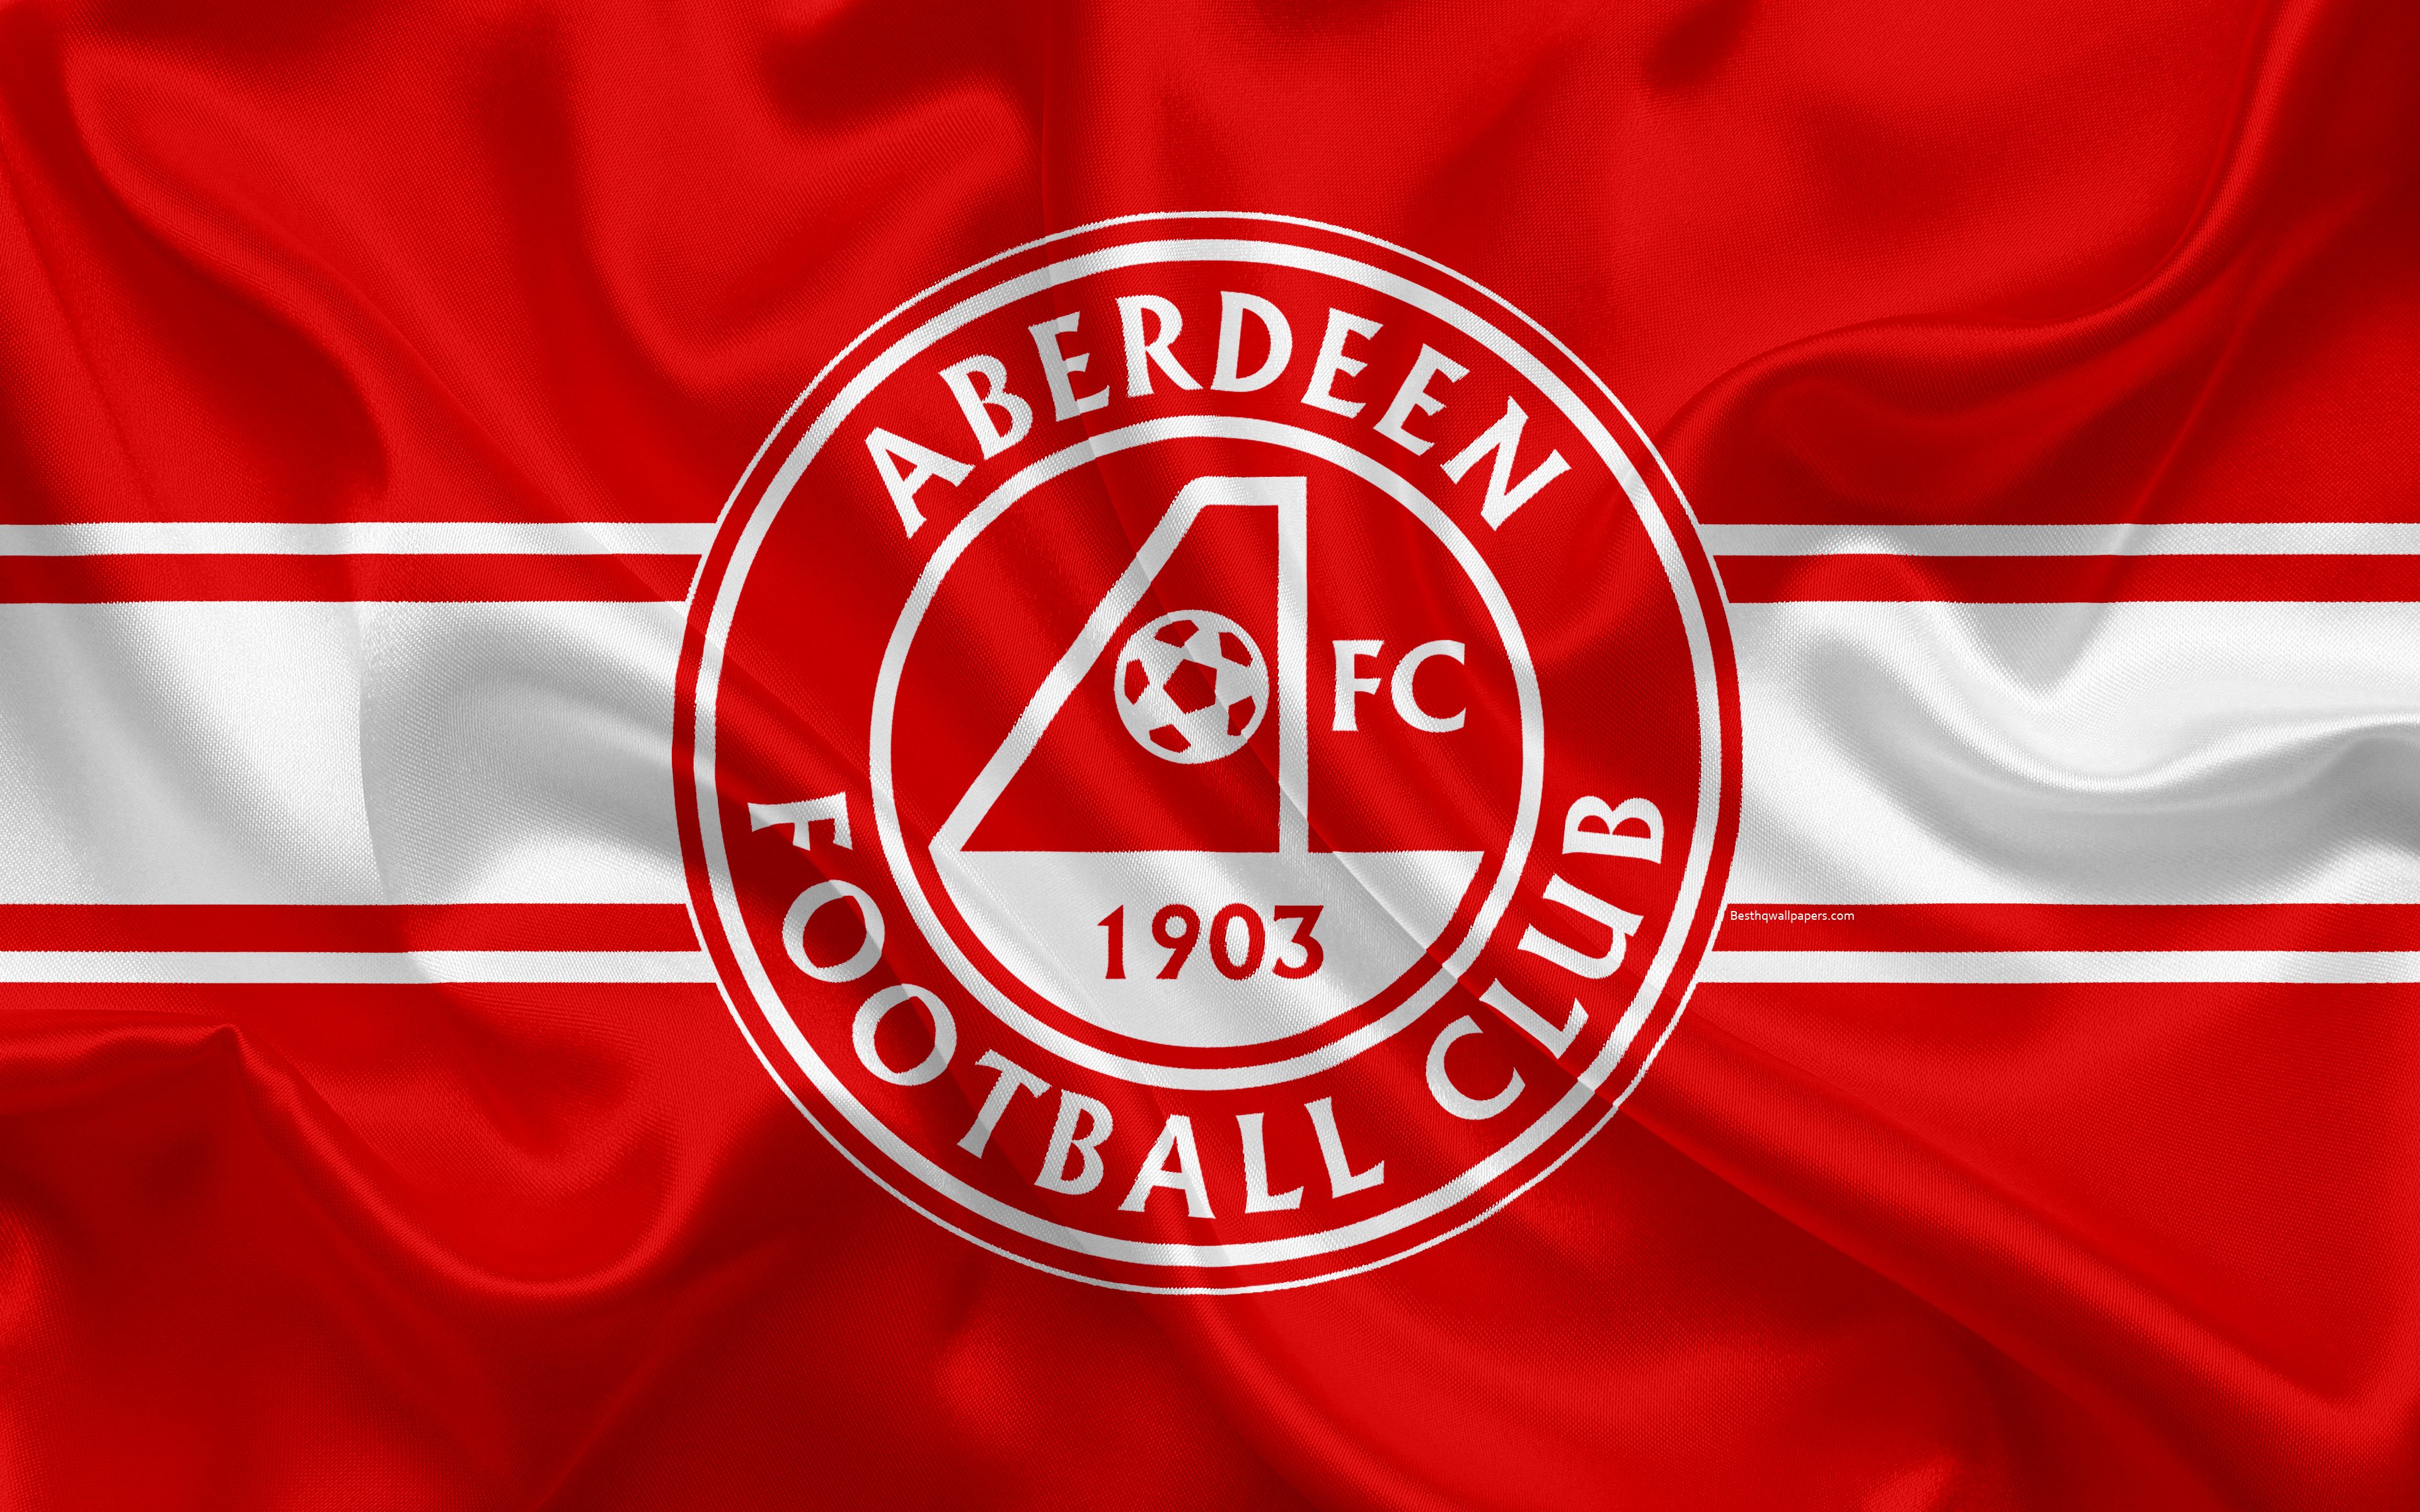 Download wallpapers Aberdeen FC 4K Scottish Football Club logo